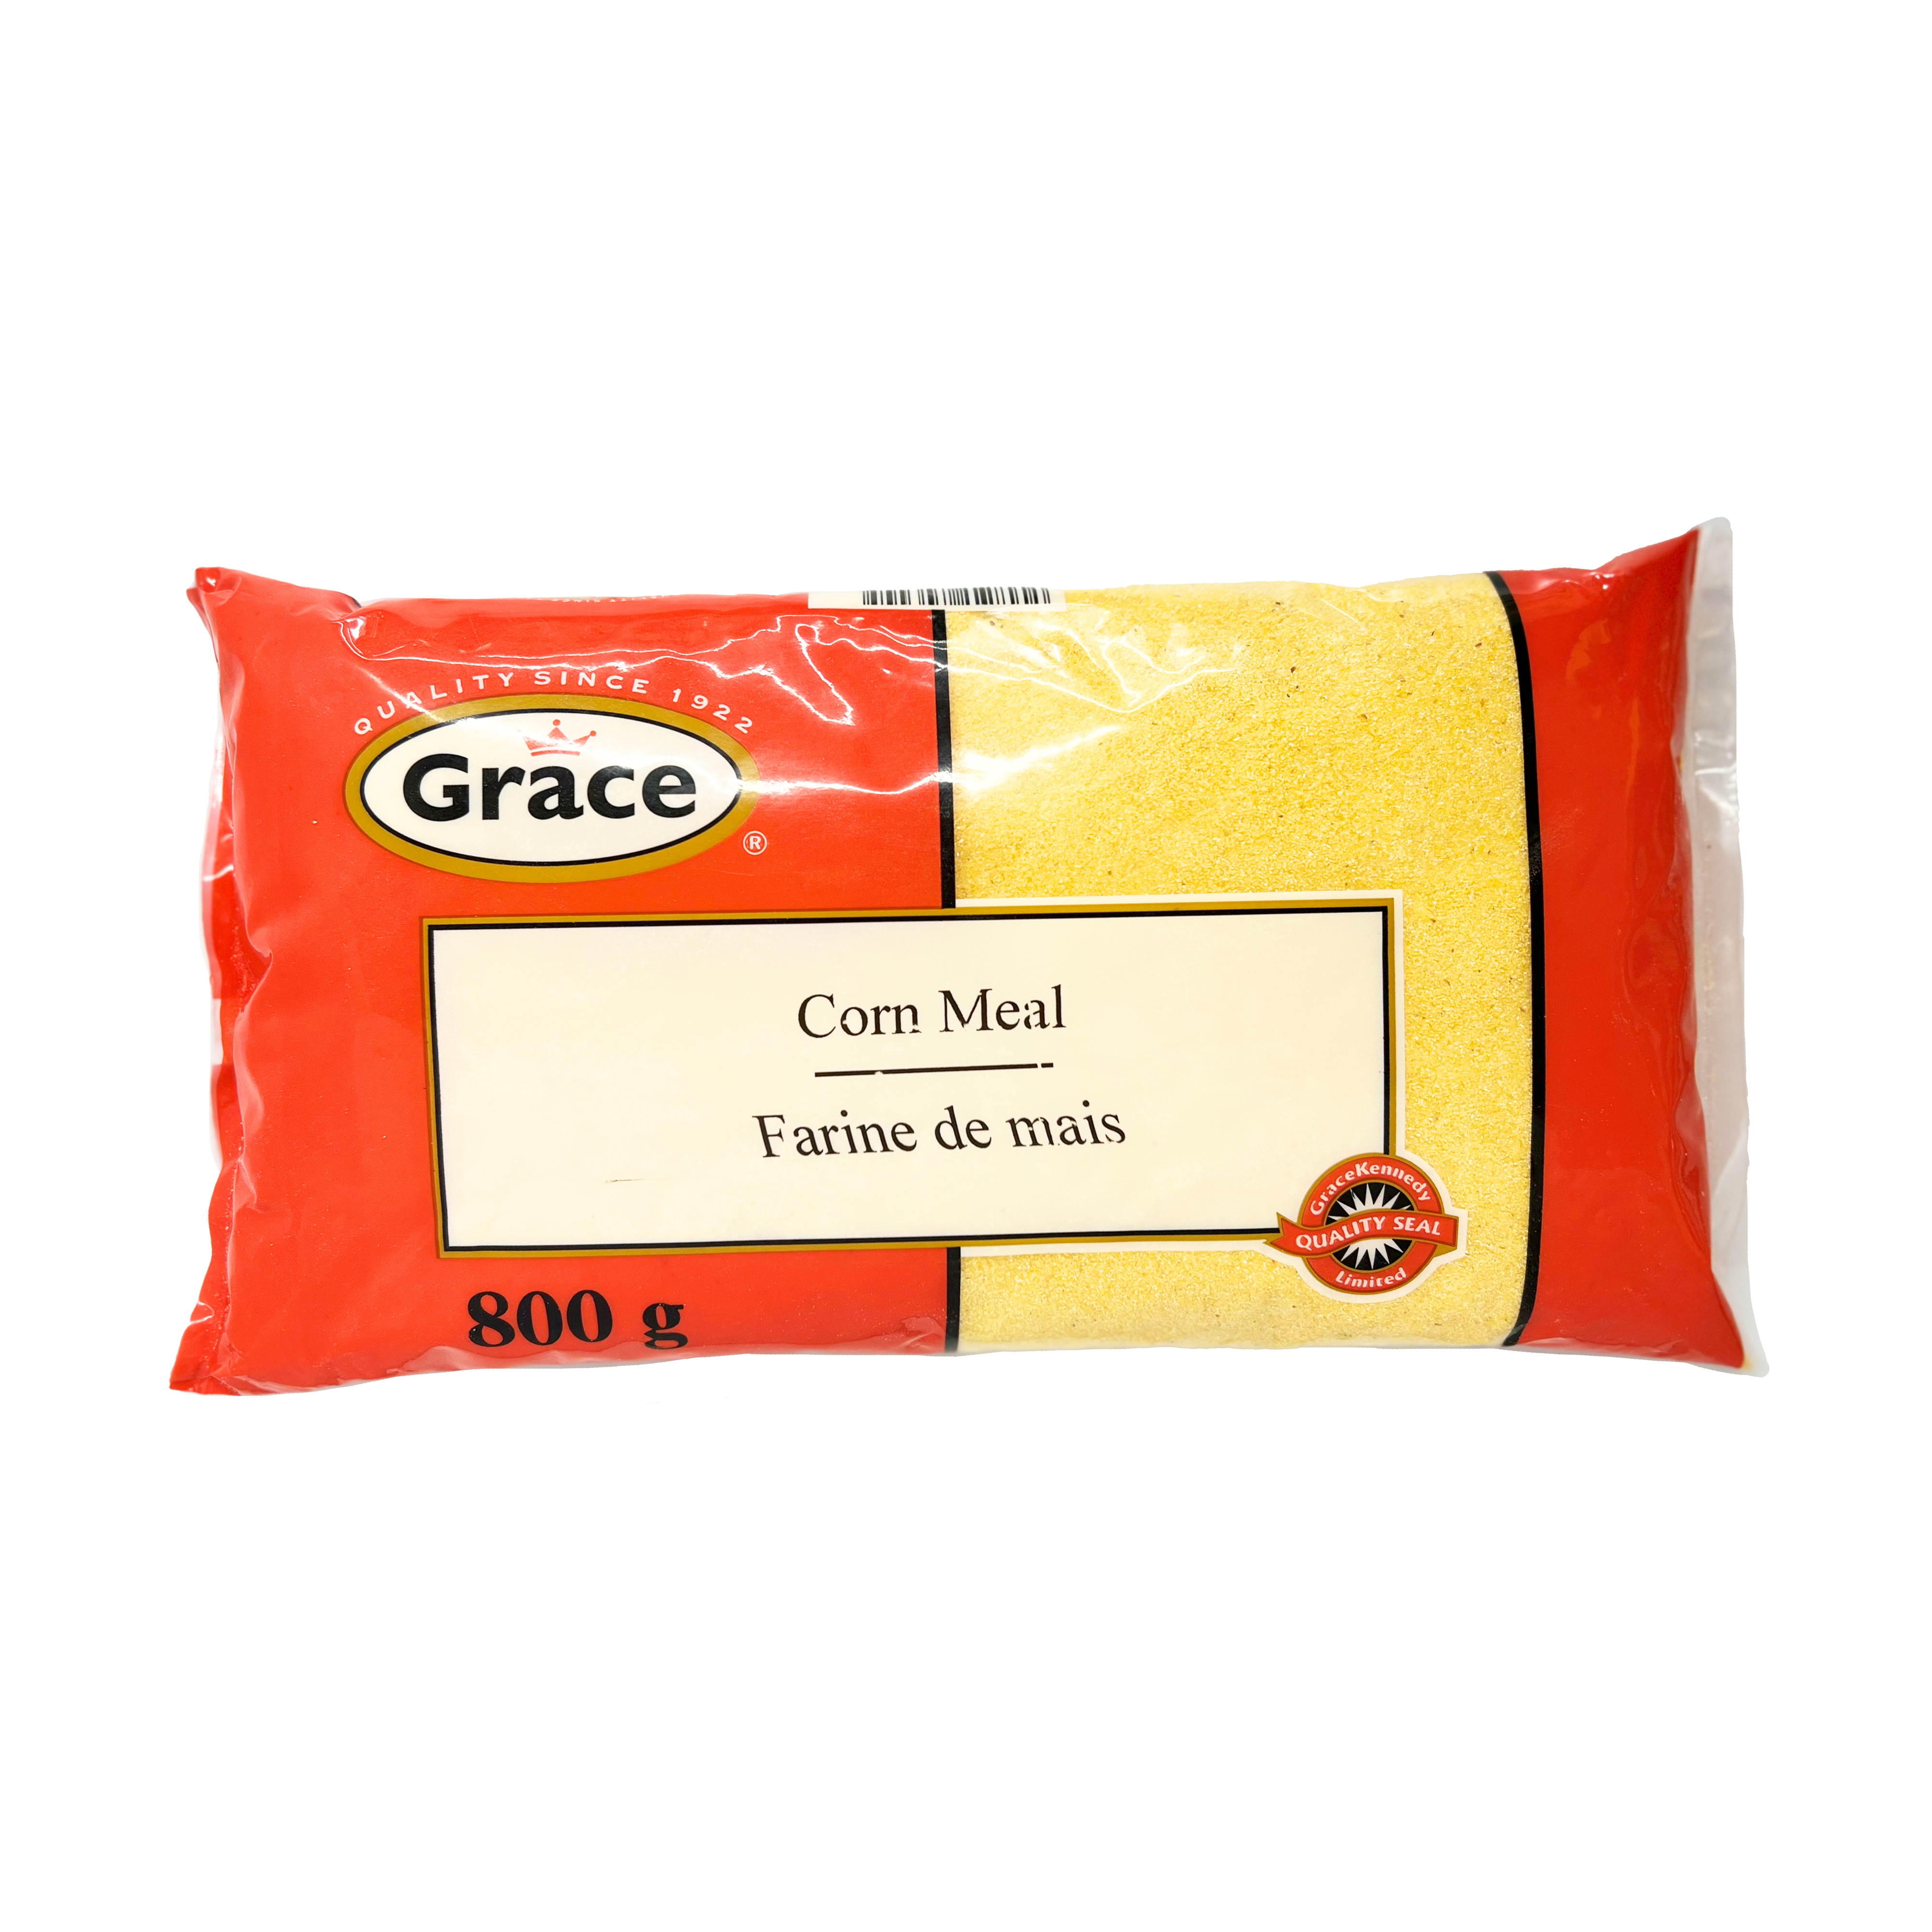 Grace Corn Meal 800g